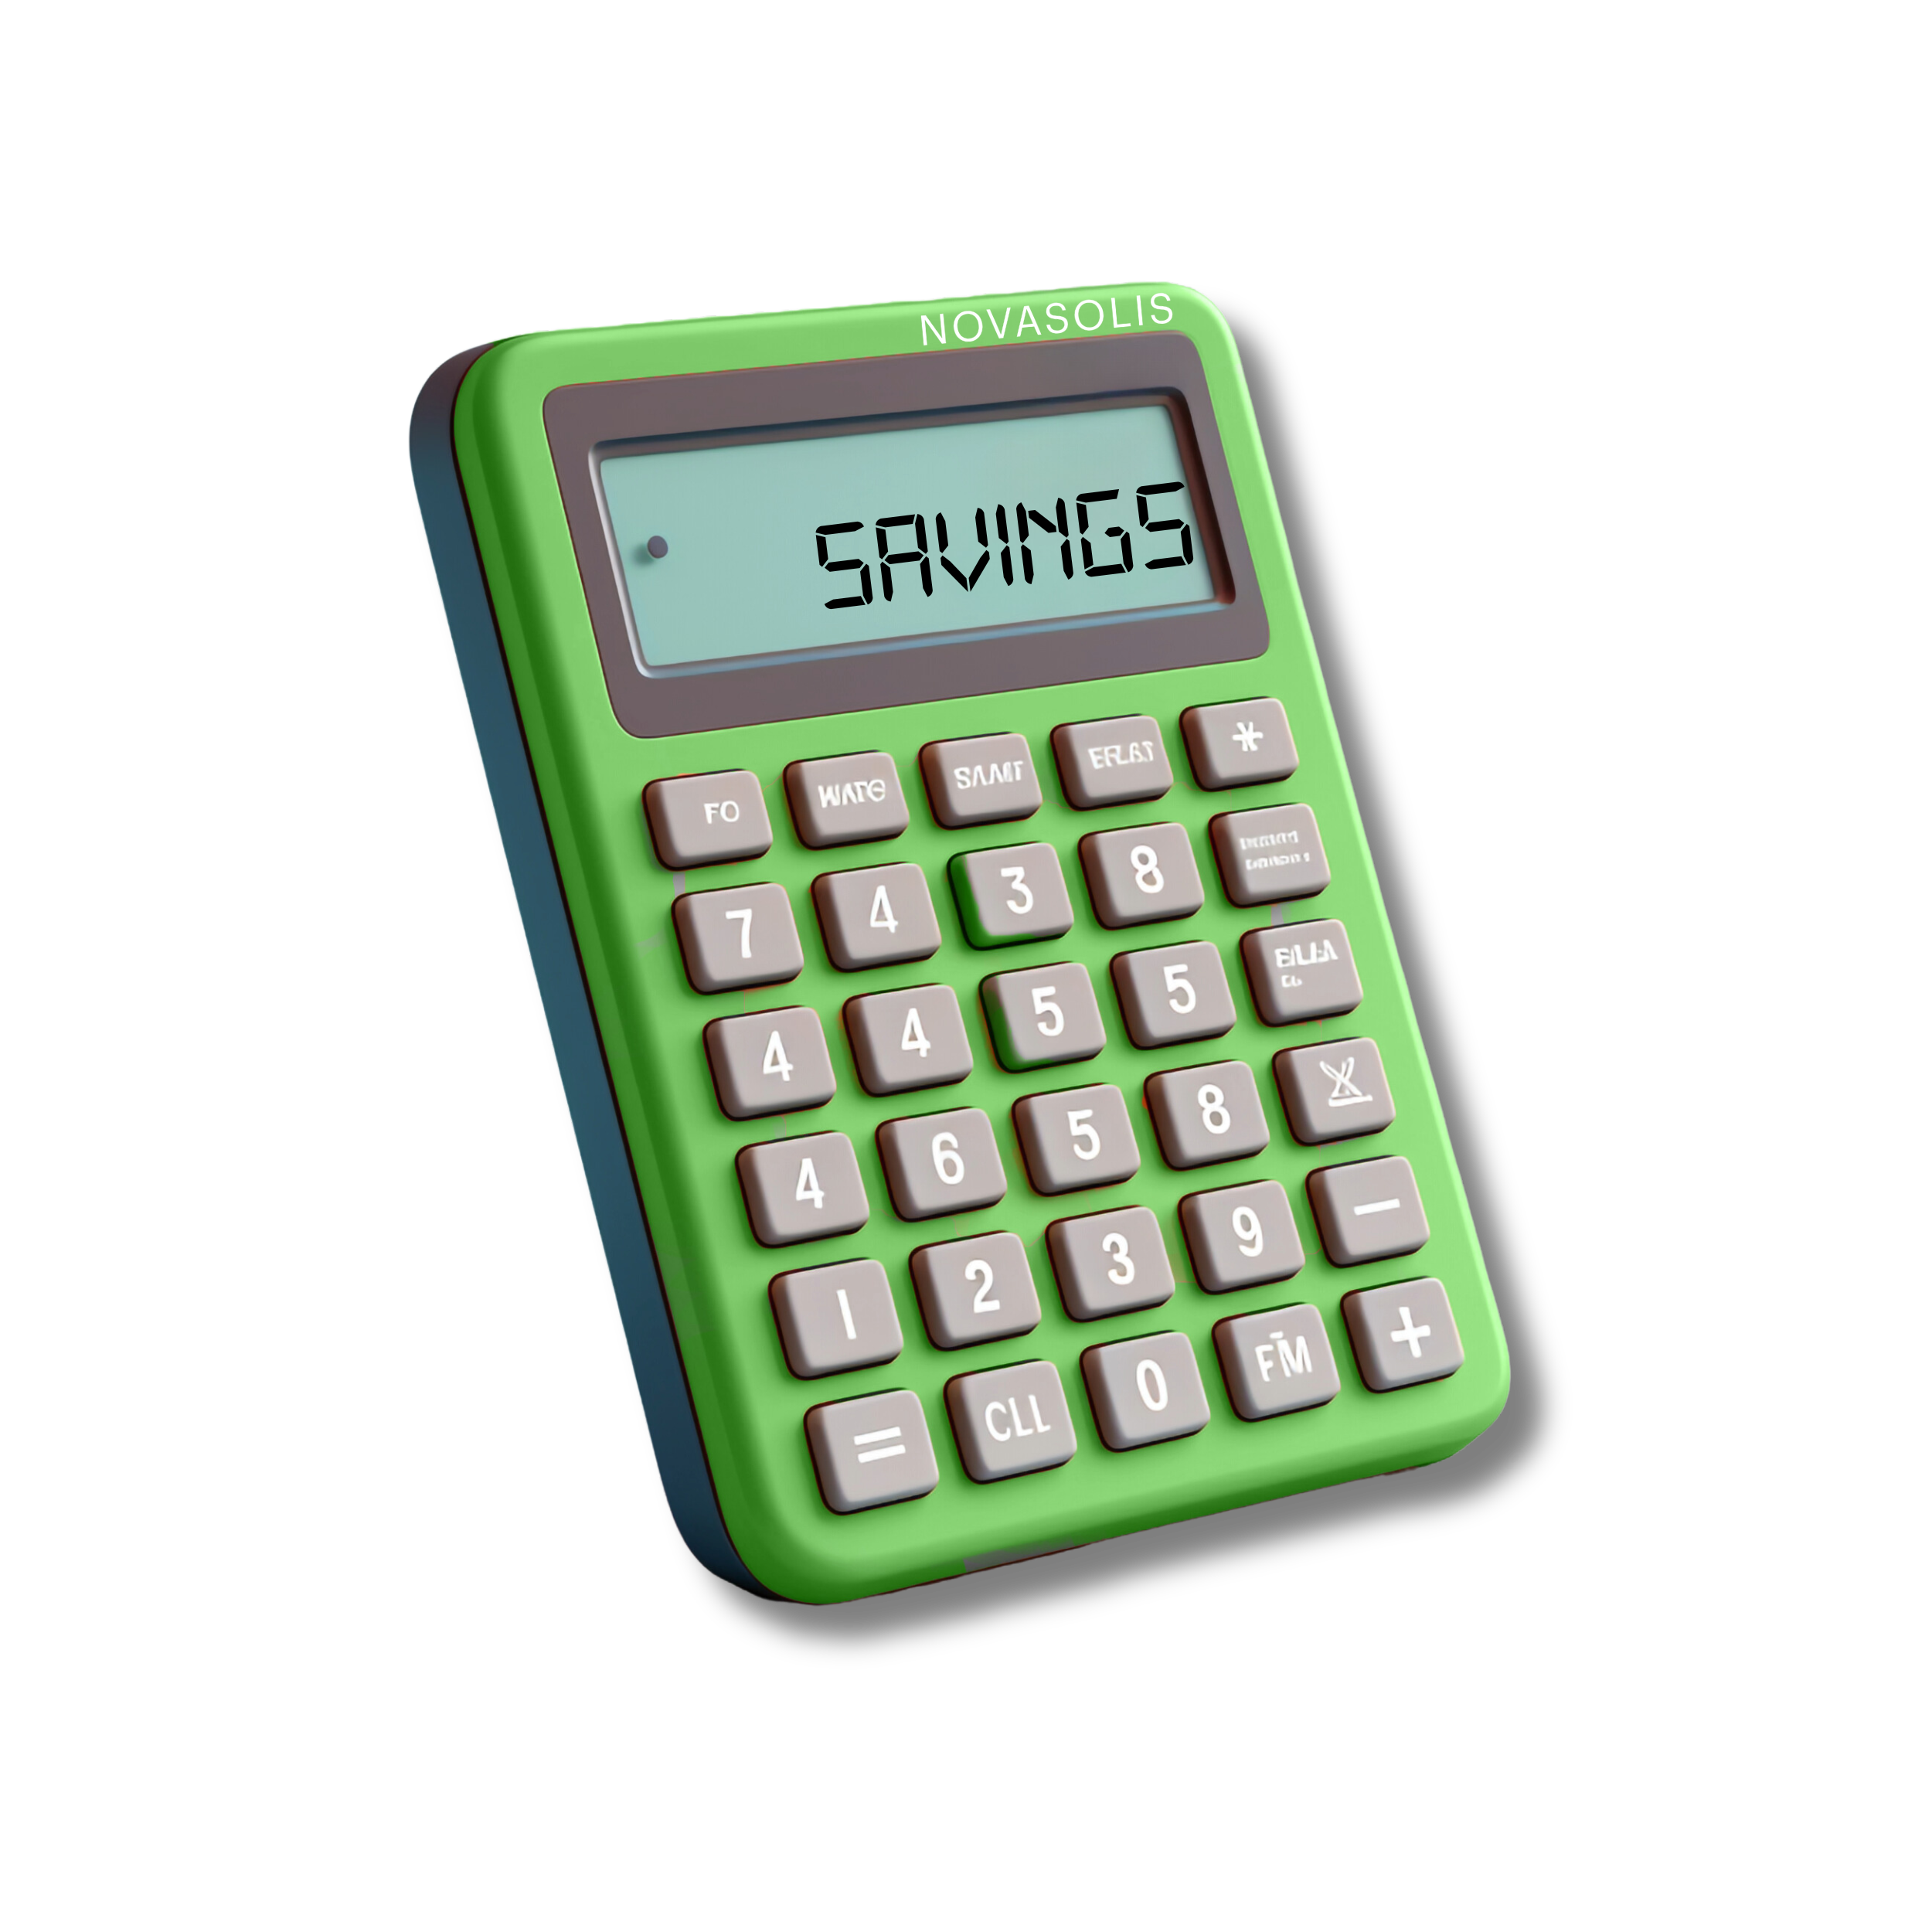 NovaSolis savings calculator